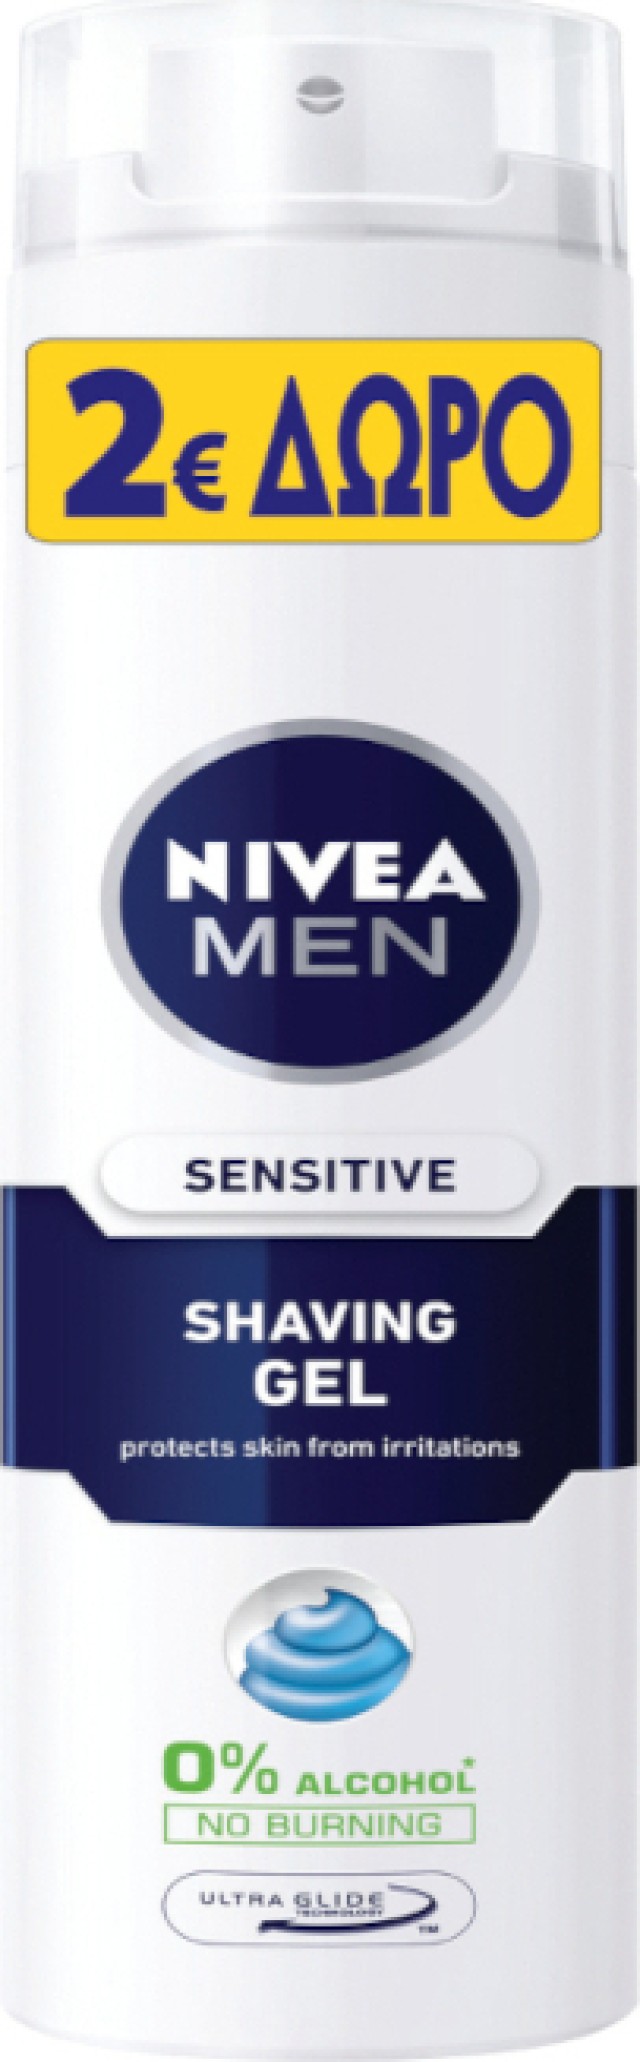 Nivea Men Sensitive Shaving Gel Ξυρίσματος για Ευαίσθητες Επιδερμίδες 200ml -2€ Επί της Τιμής